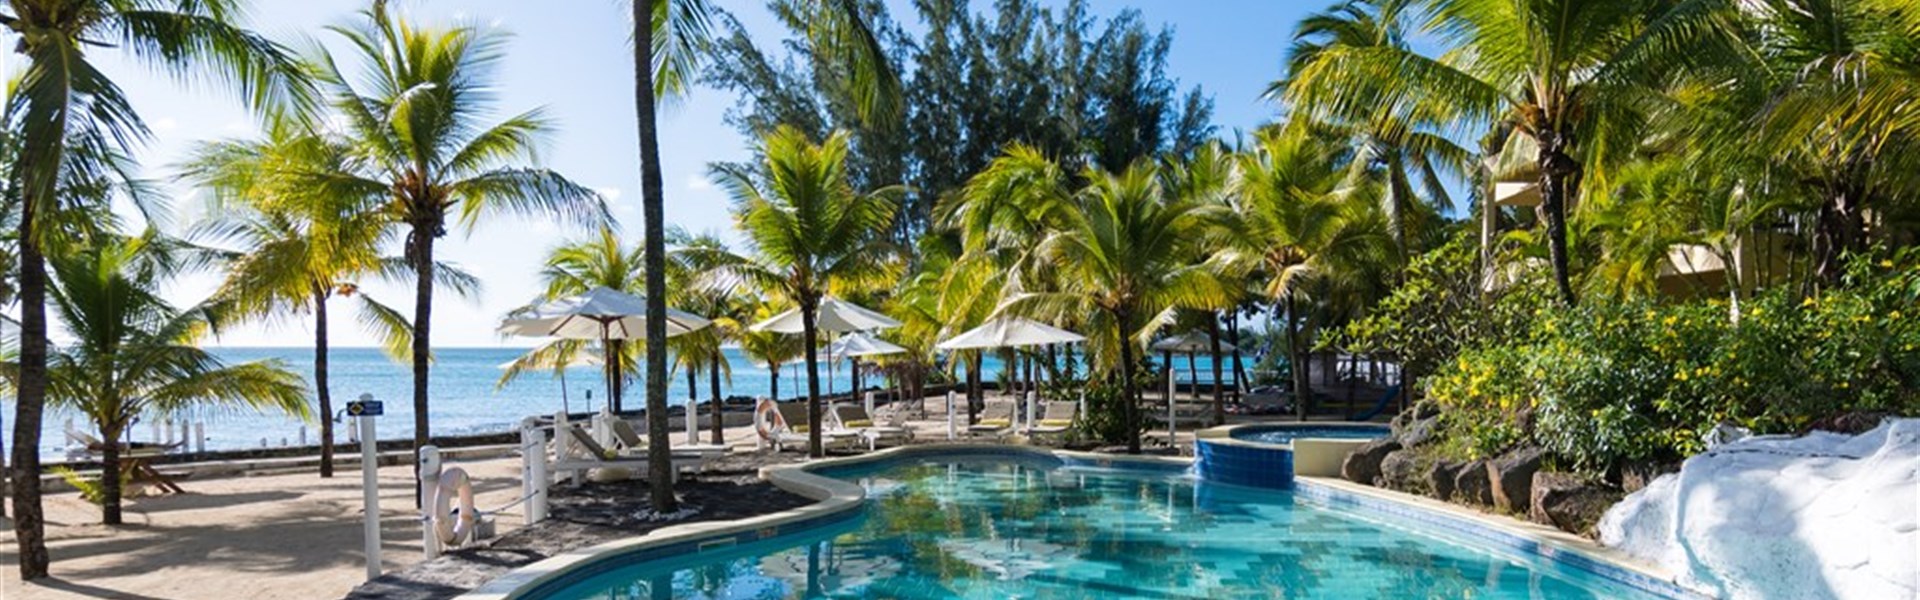 Marco Polo - Hibiscus Beach Resort & Spa - 